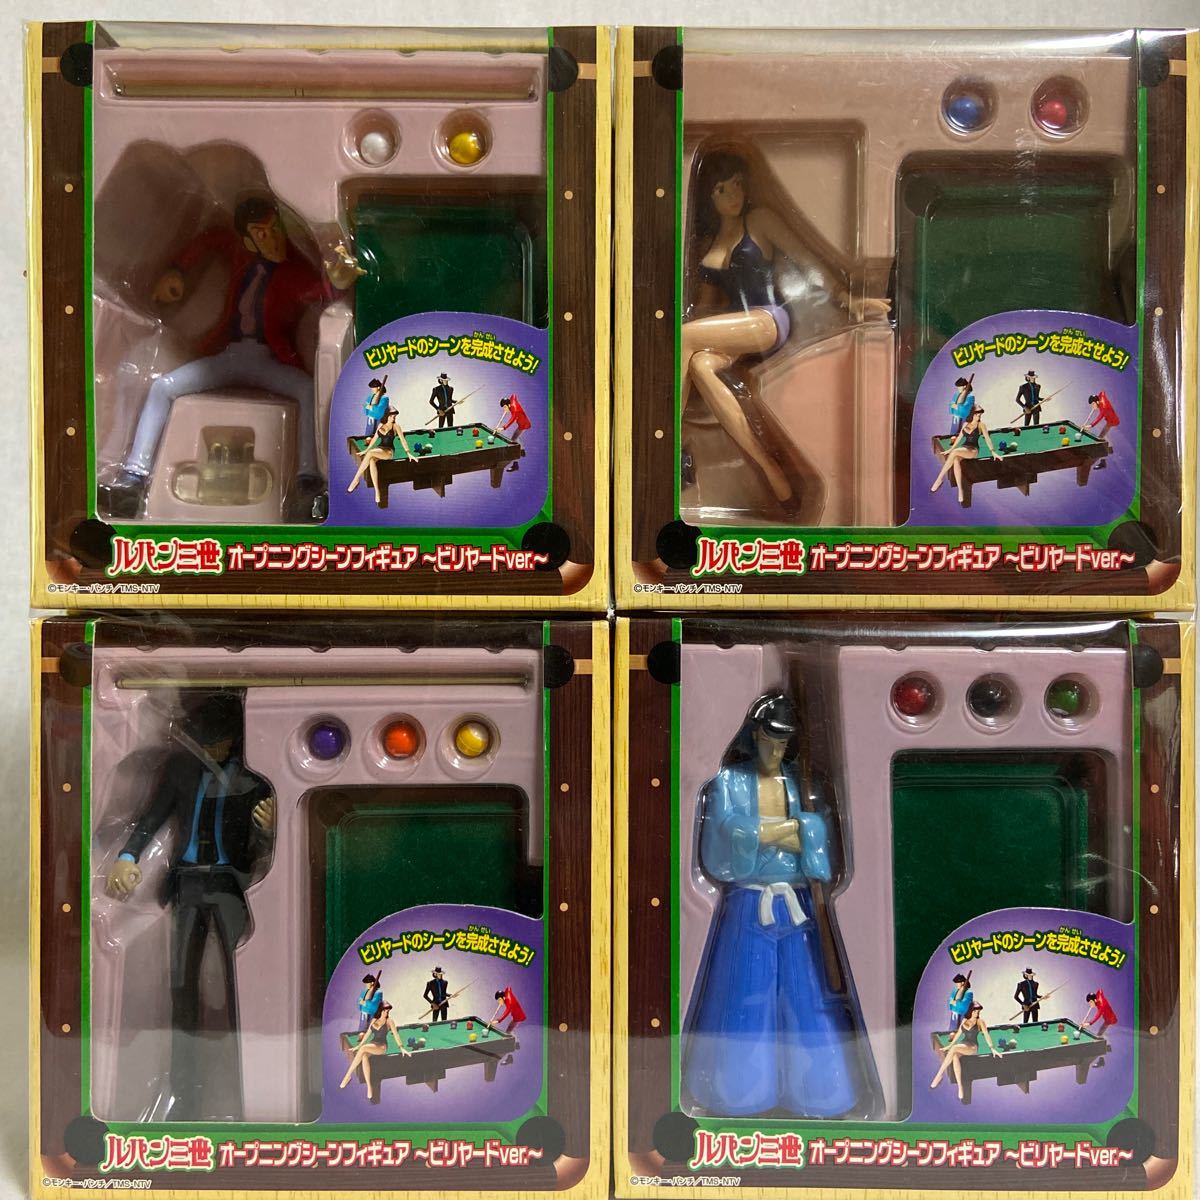  все 4 вид полный комплект Lupin III открытие scene фигурка бильярд Mine Fujiko Jigen Daisuke Ishikawa ... Monkey дырокол не продается 